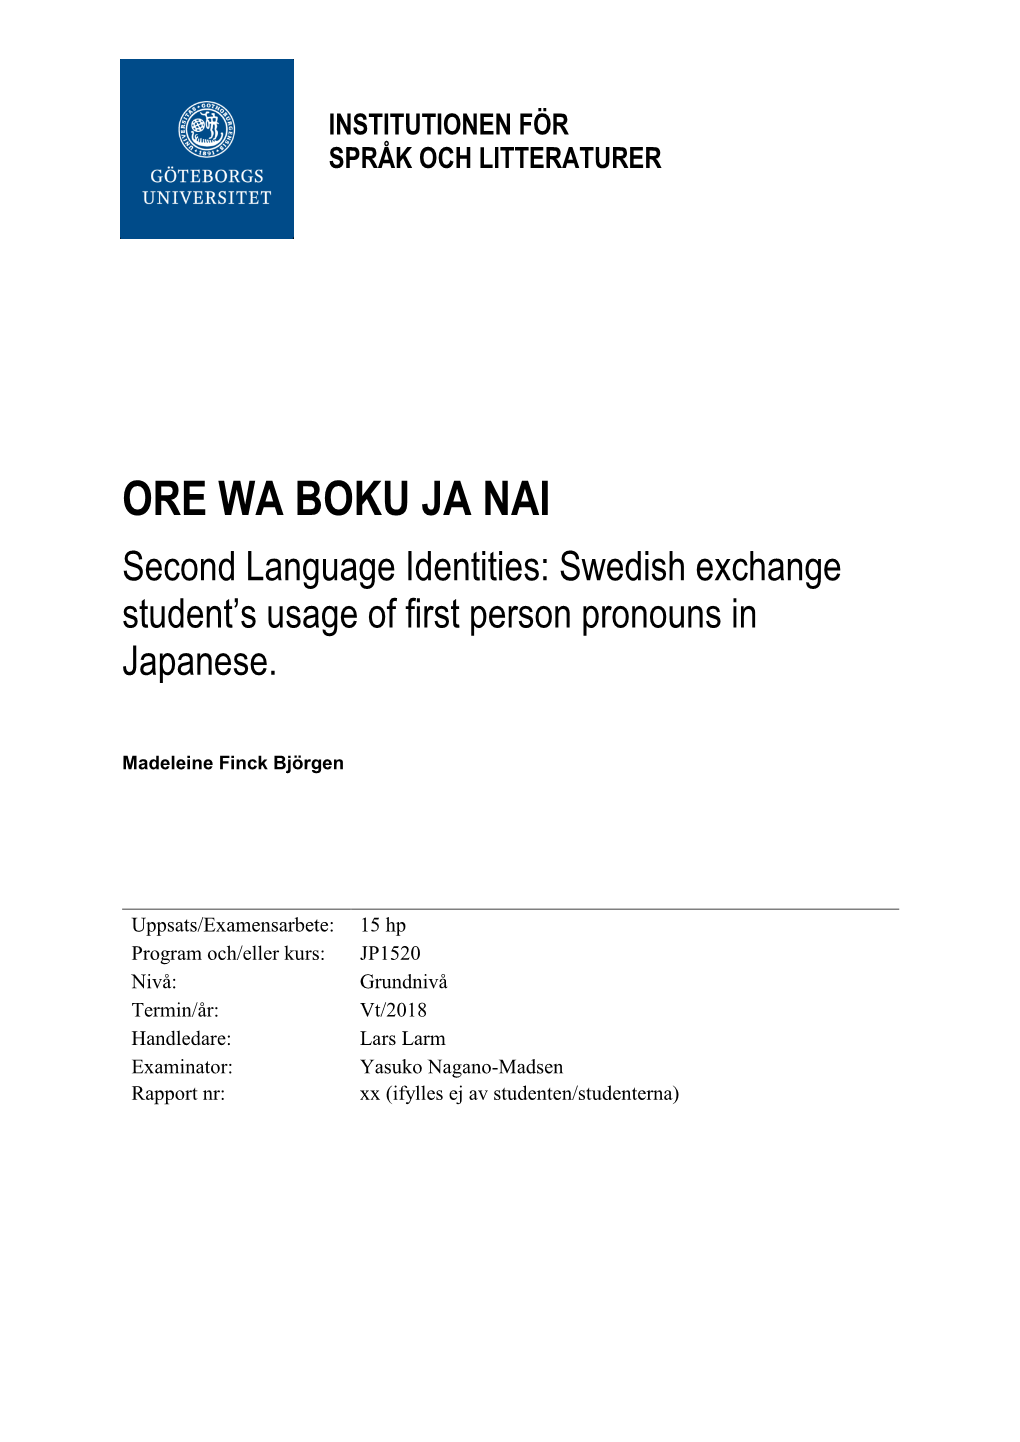 ORE WA BOKU JA NAI Second Language Identities: Swedish Exchange Student’S Usage of First Person Pronouns in Japanese